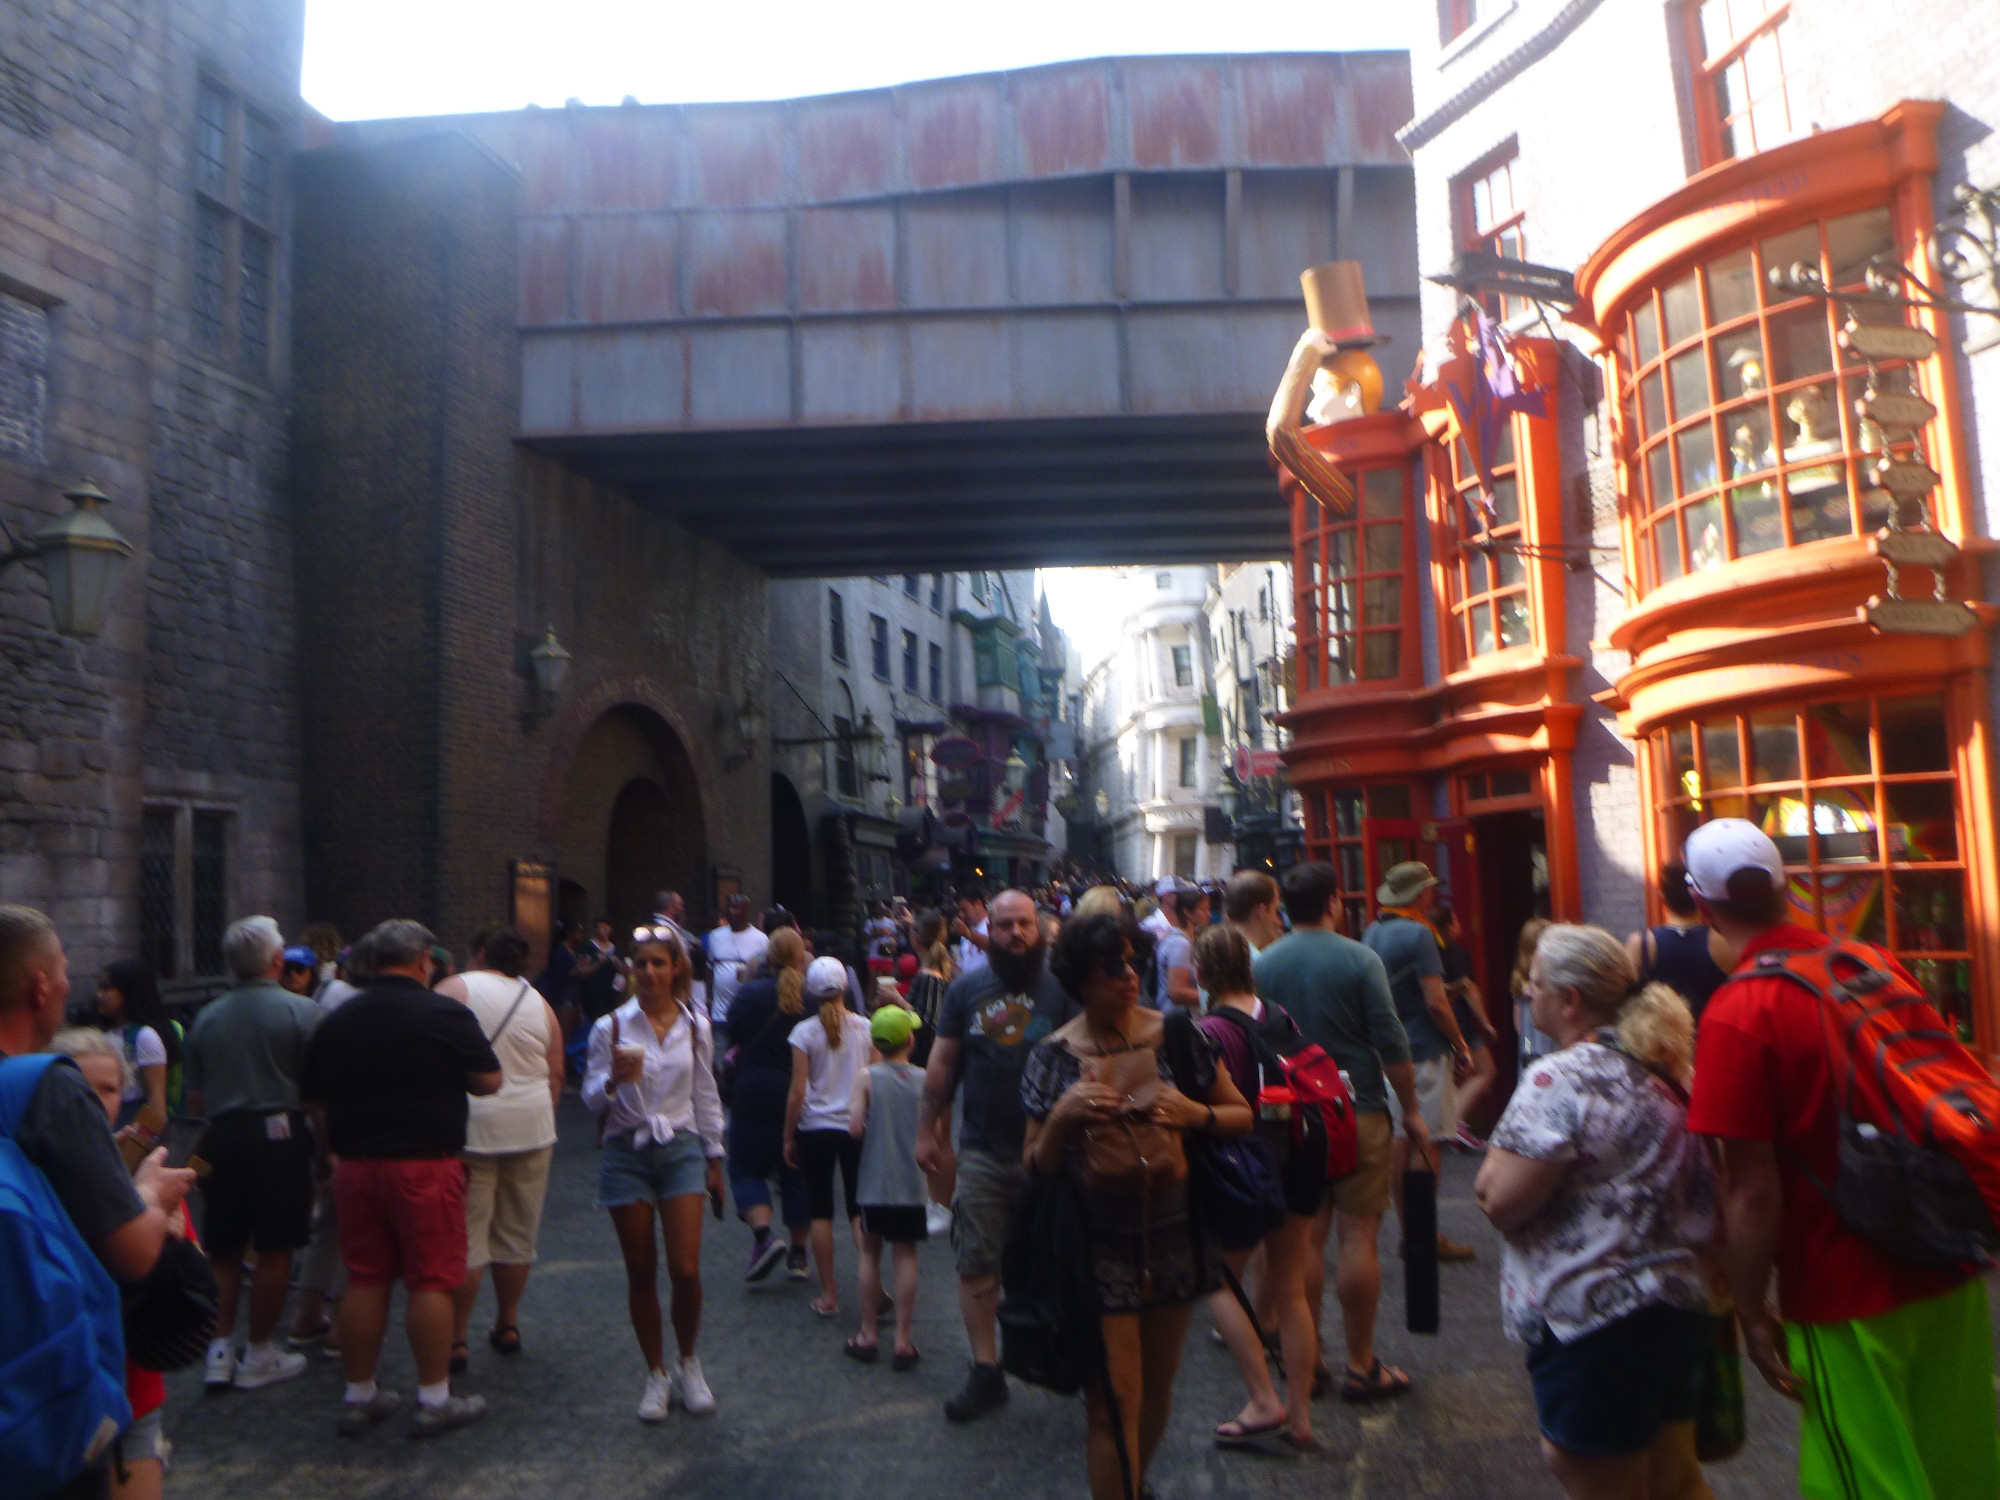 Universal Studios Harry Potter